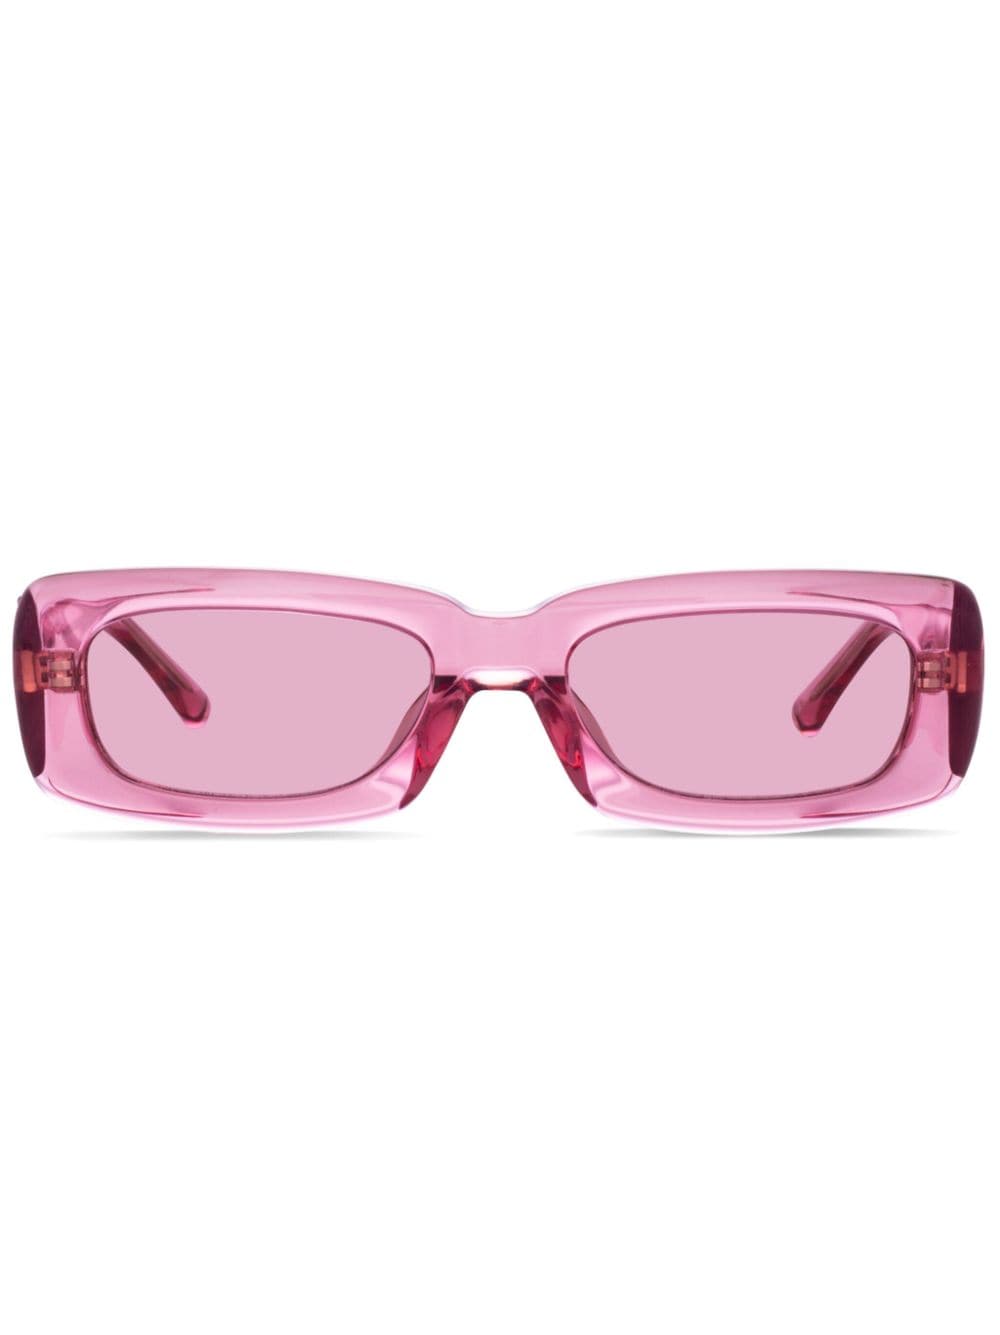 Linda Farrow x Linda Farrow Marfa sunglasses - Pink von Linda Farrow